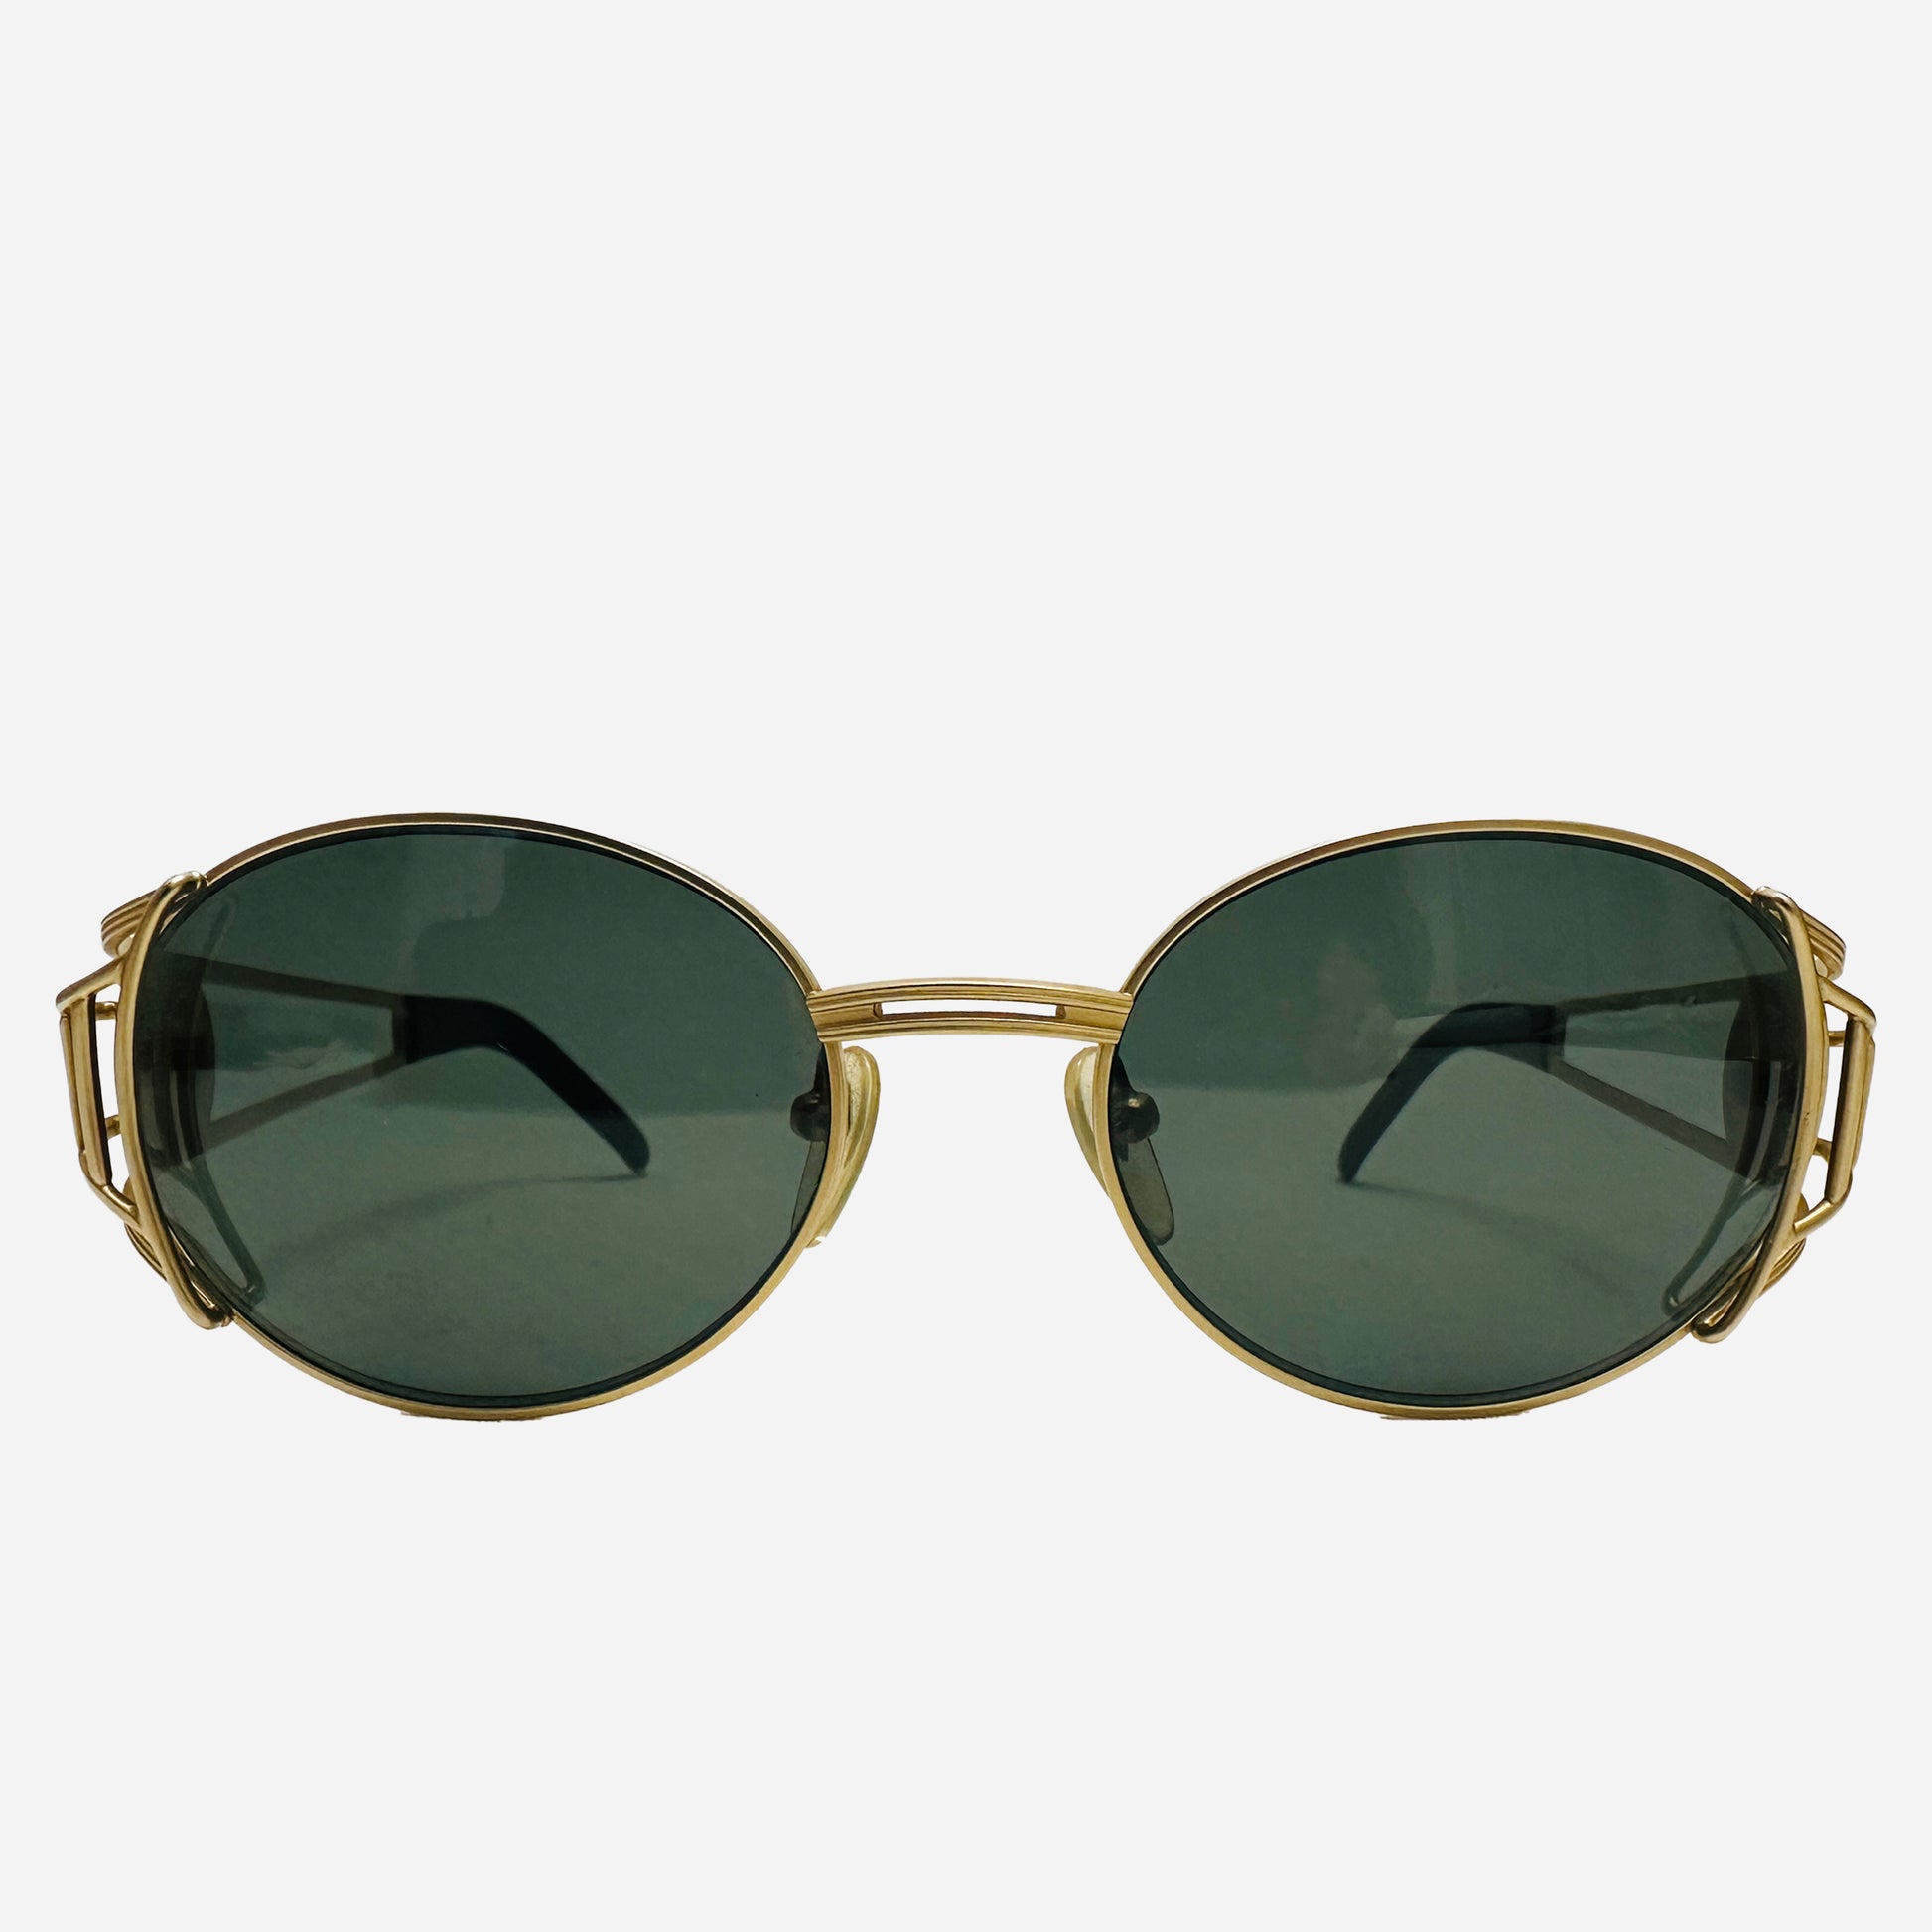 Vintage-Jean-Paul-Gaultier-Sonnenbrille-Sunglasses-Model58-6102-made-in-japan-the-seekers-sunglasses